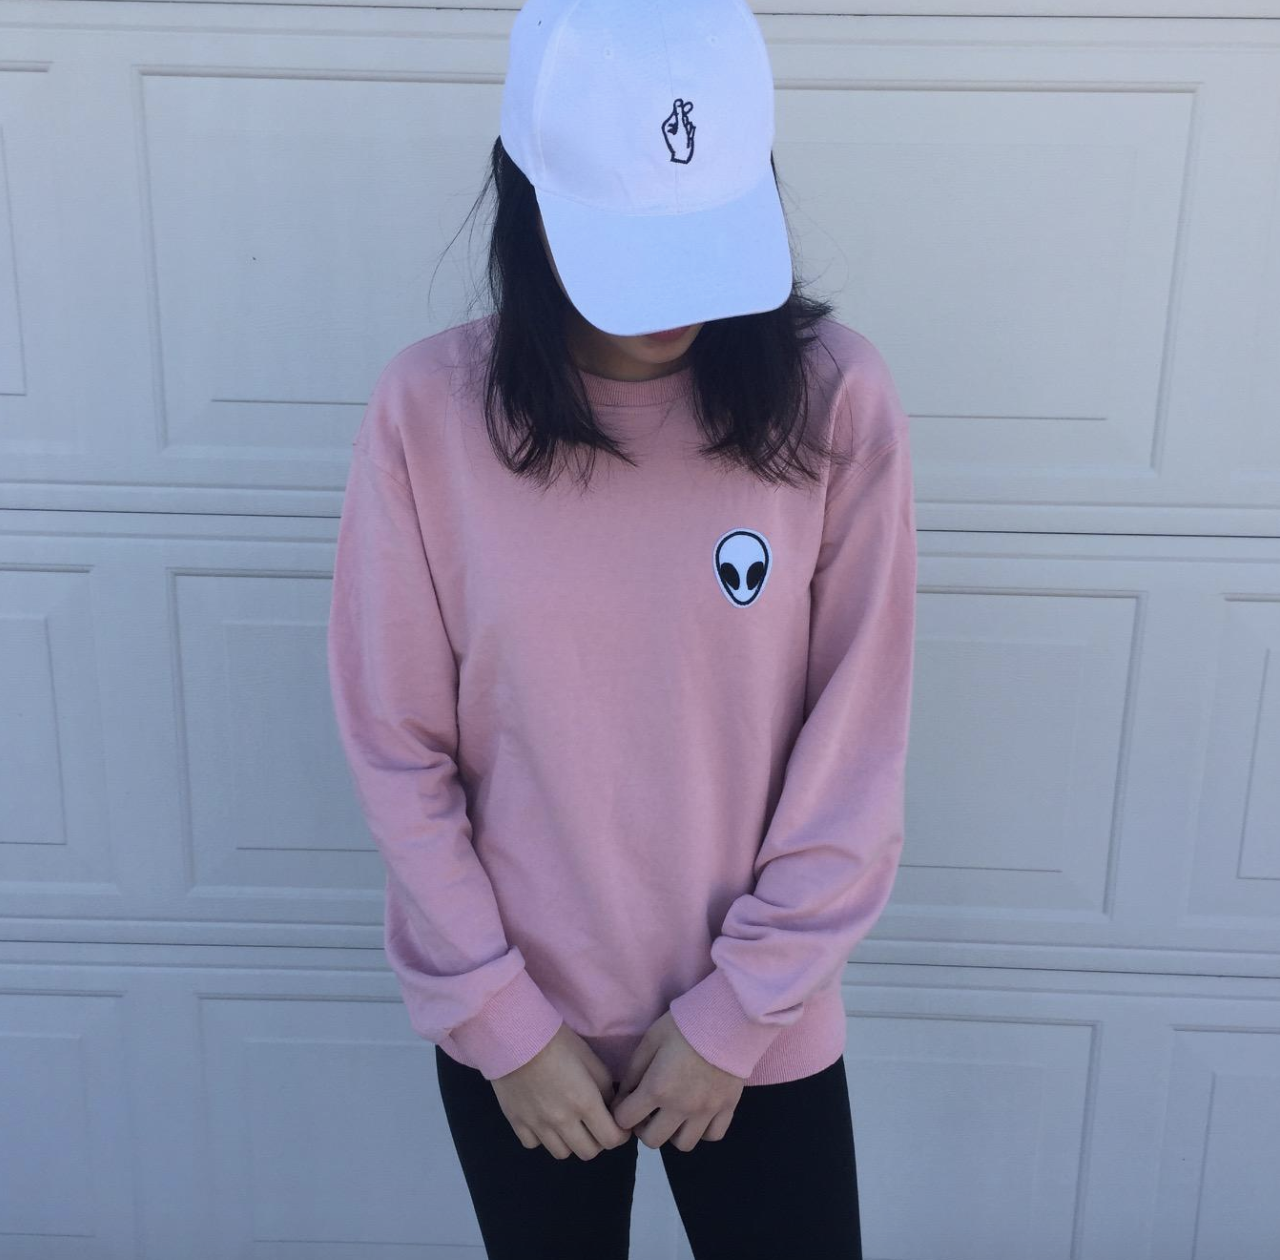 reviewer wearing the pink sweatshirt